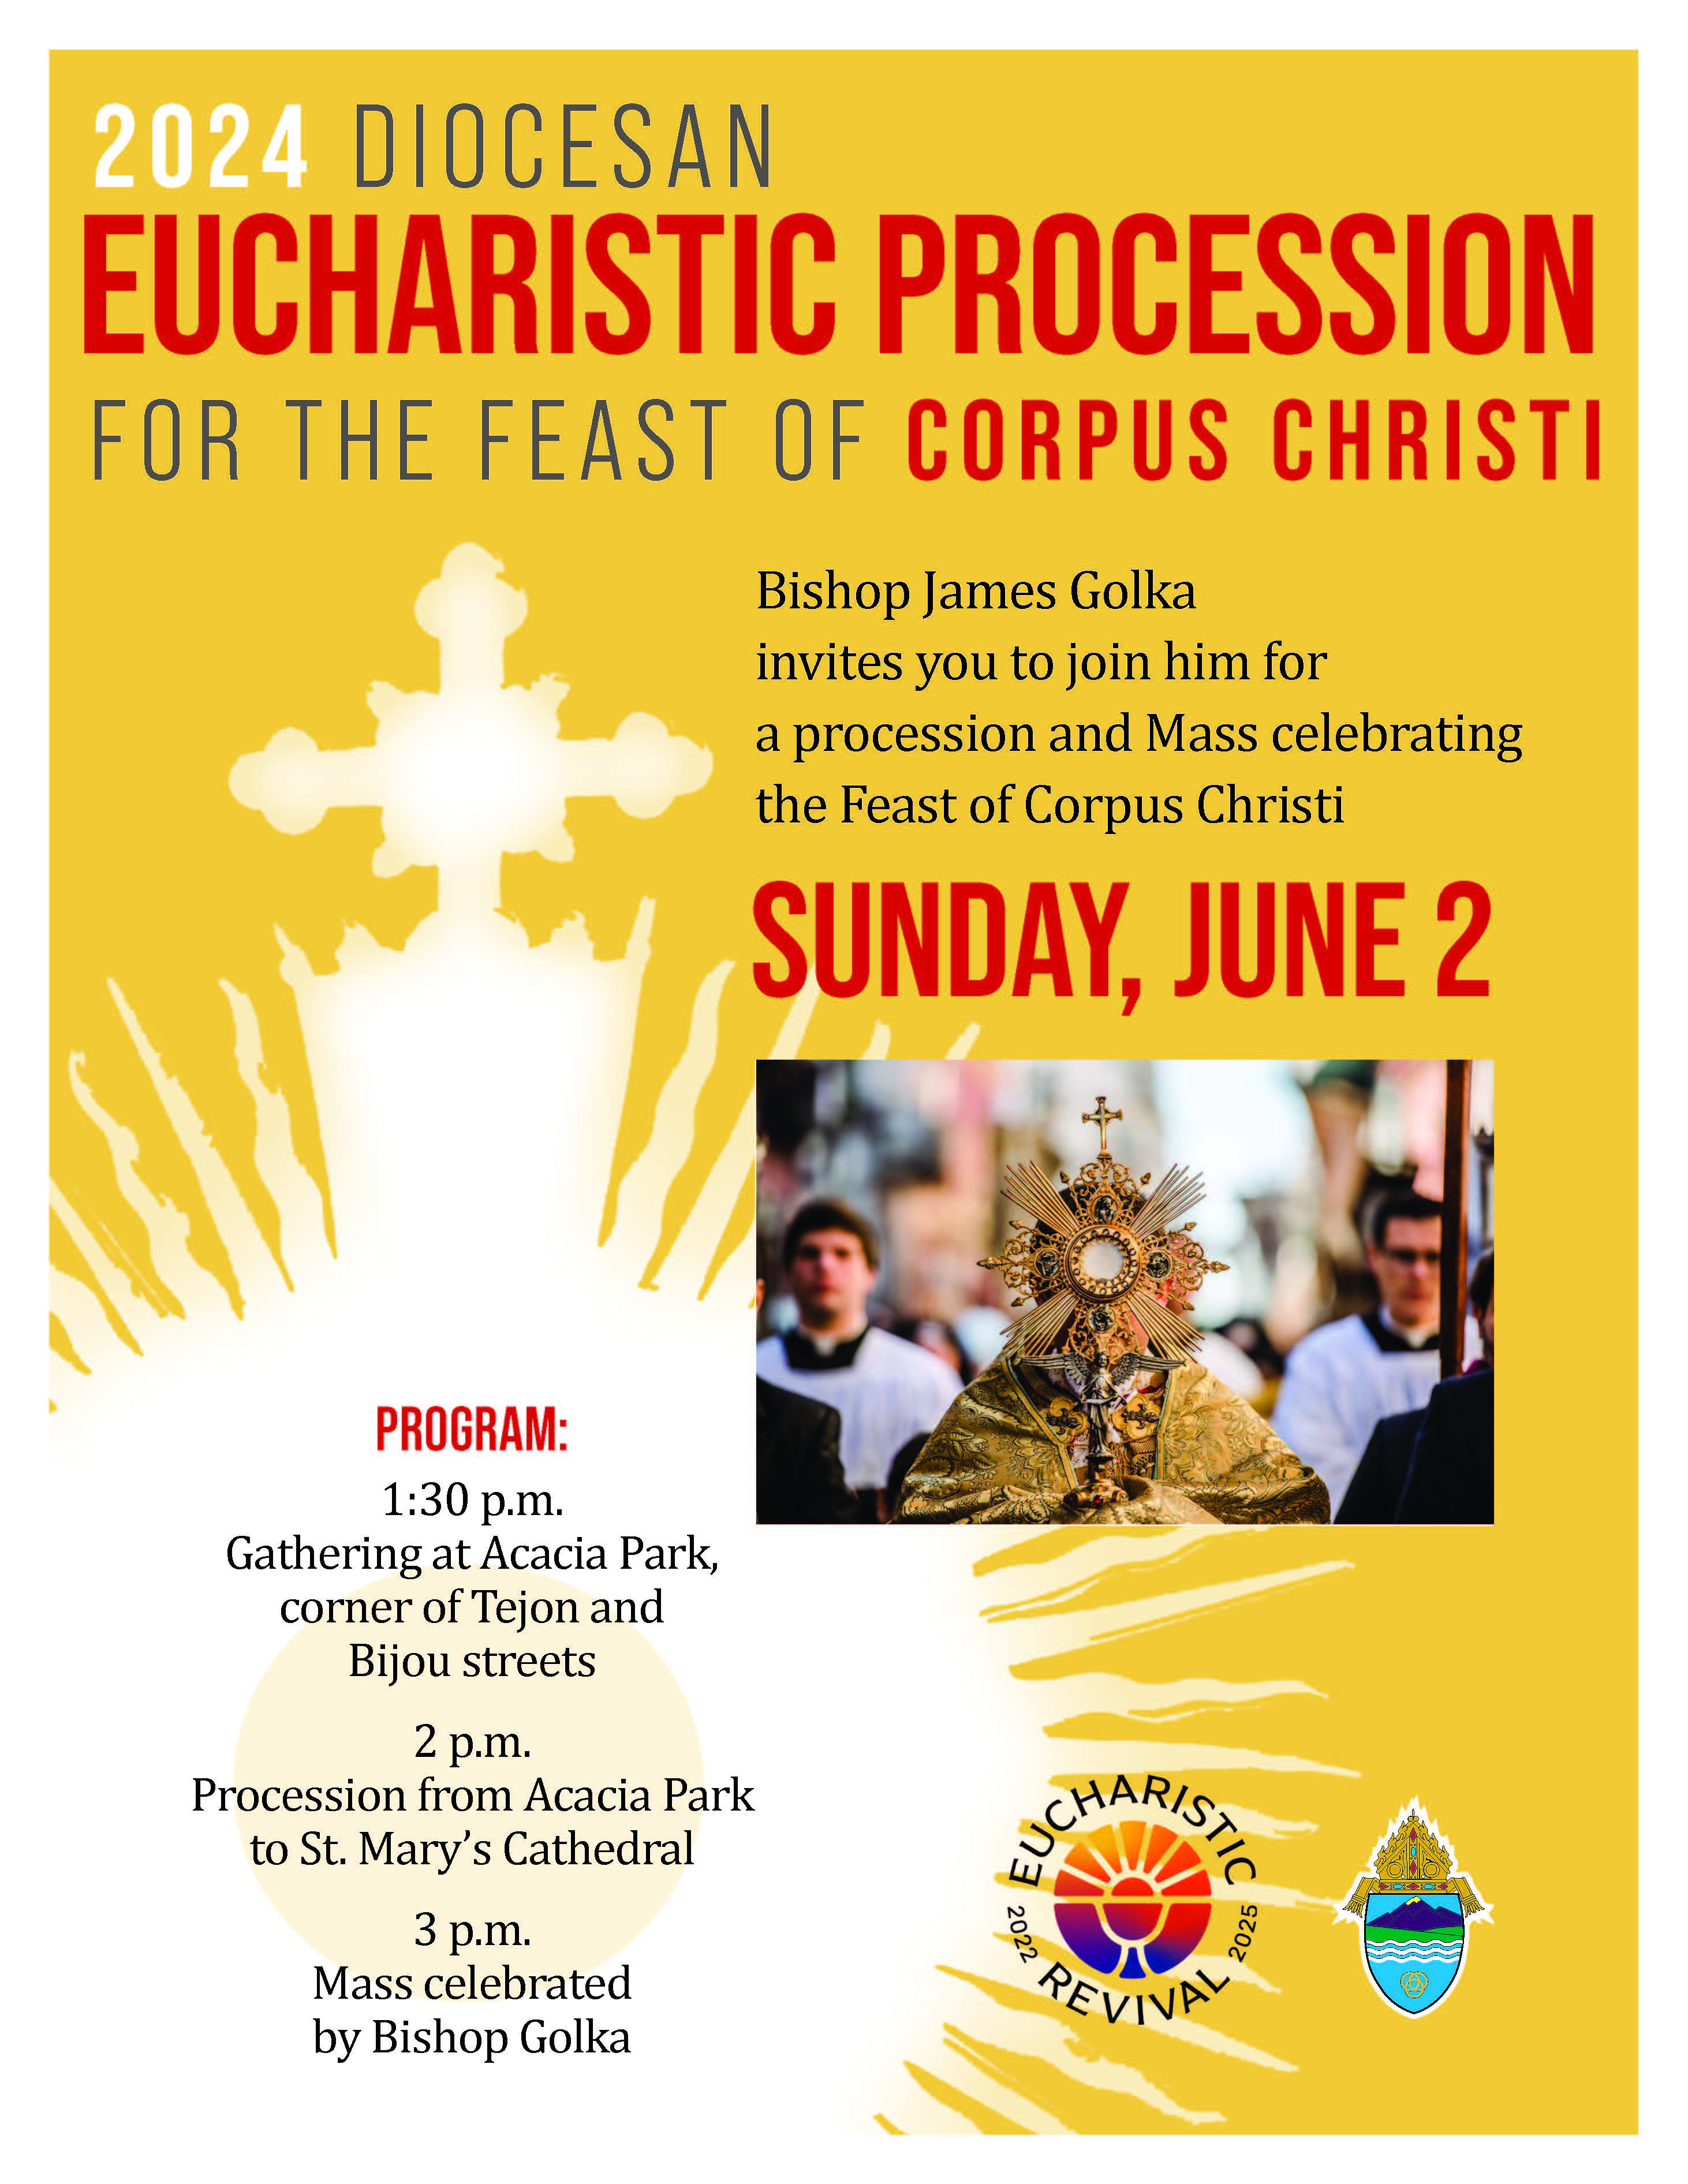 2024 Diocesan Eucharistic Procession for the Feast of Corpus Christi